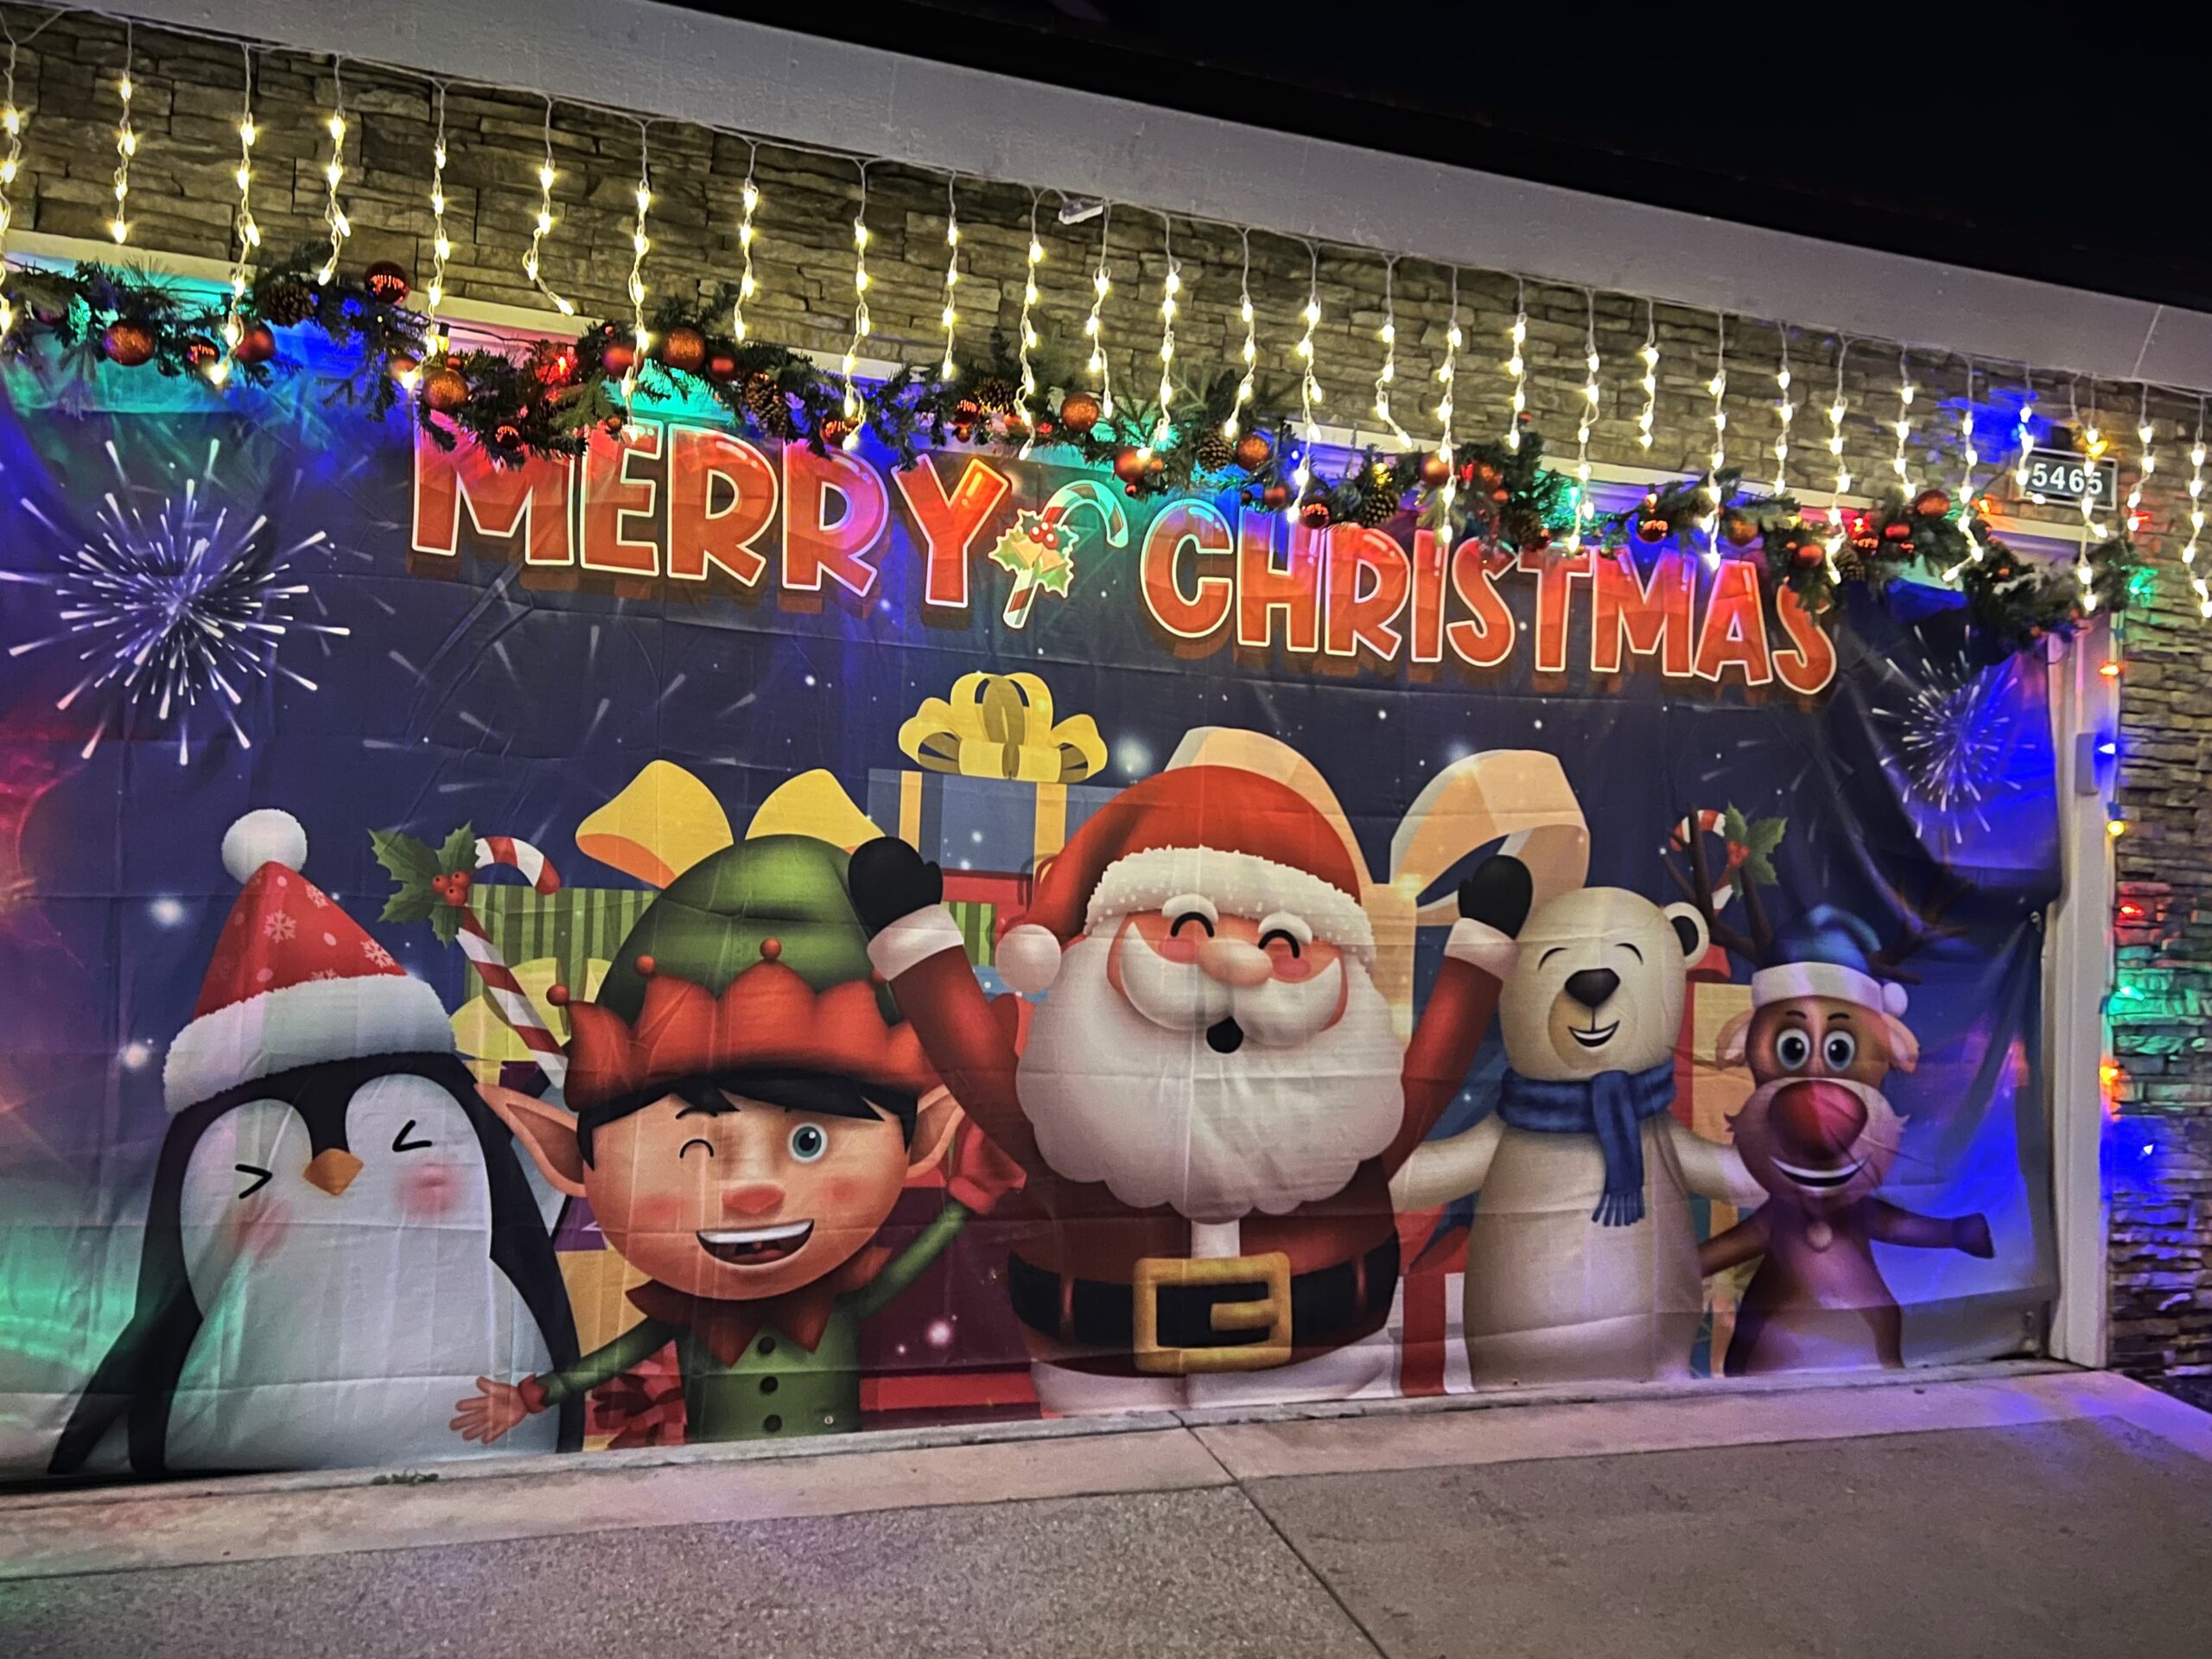 Garage door decorations featuring santa and friends.